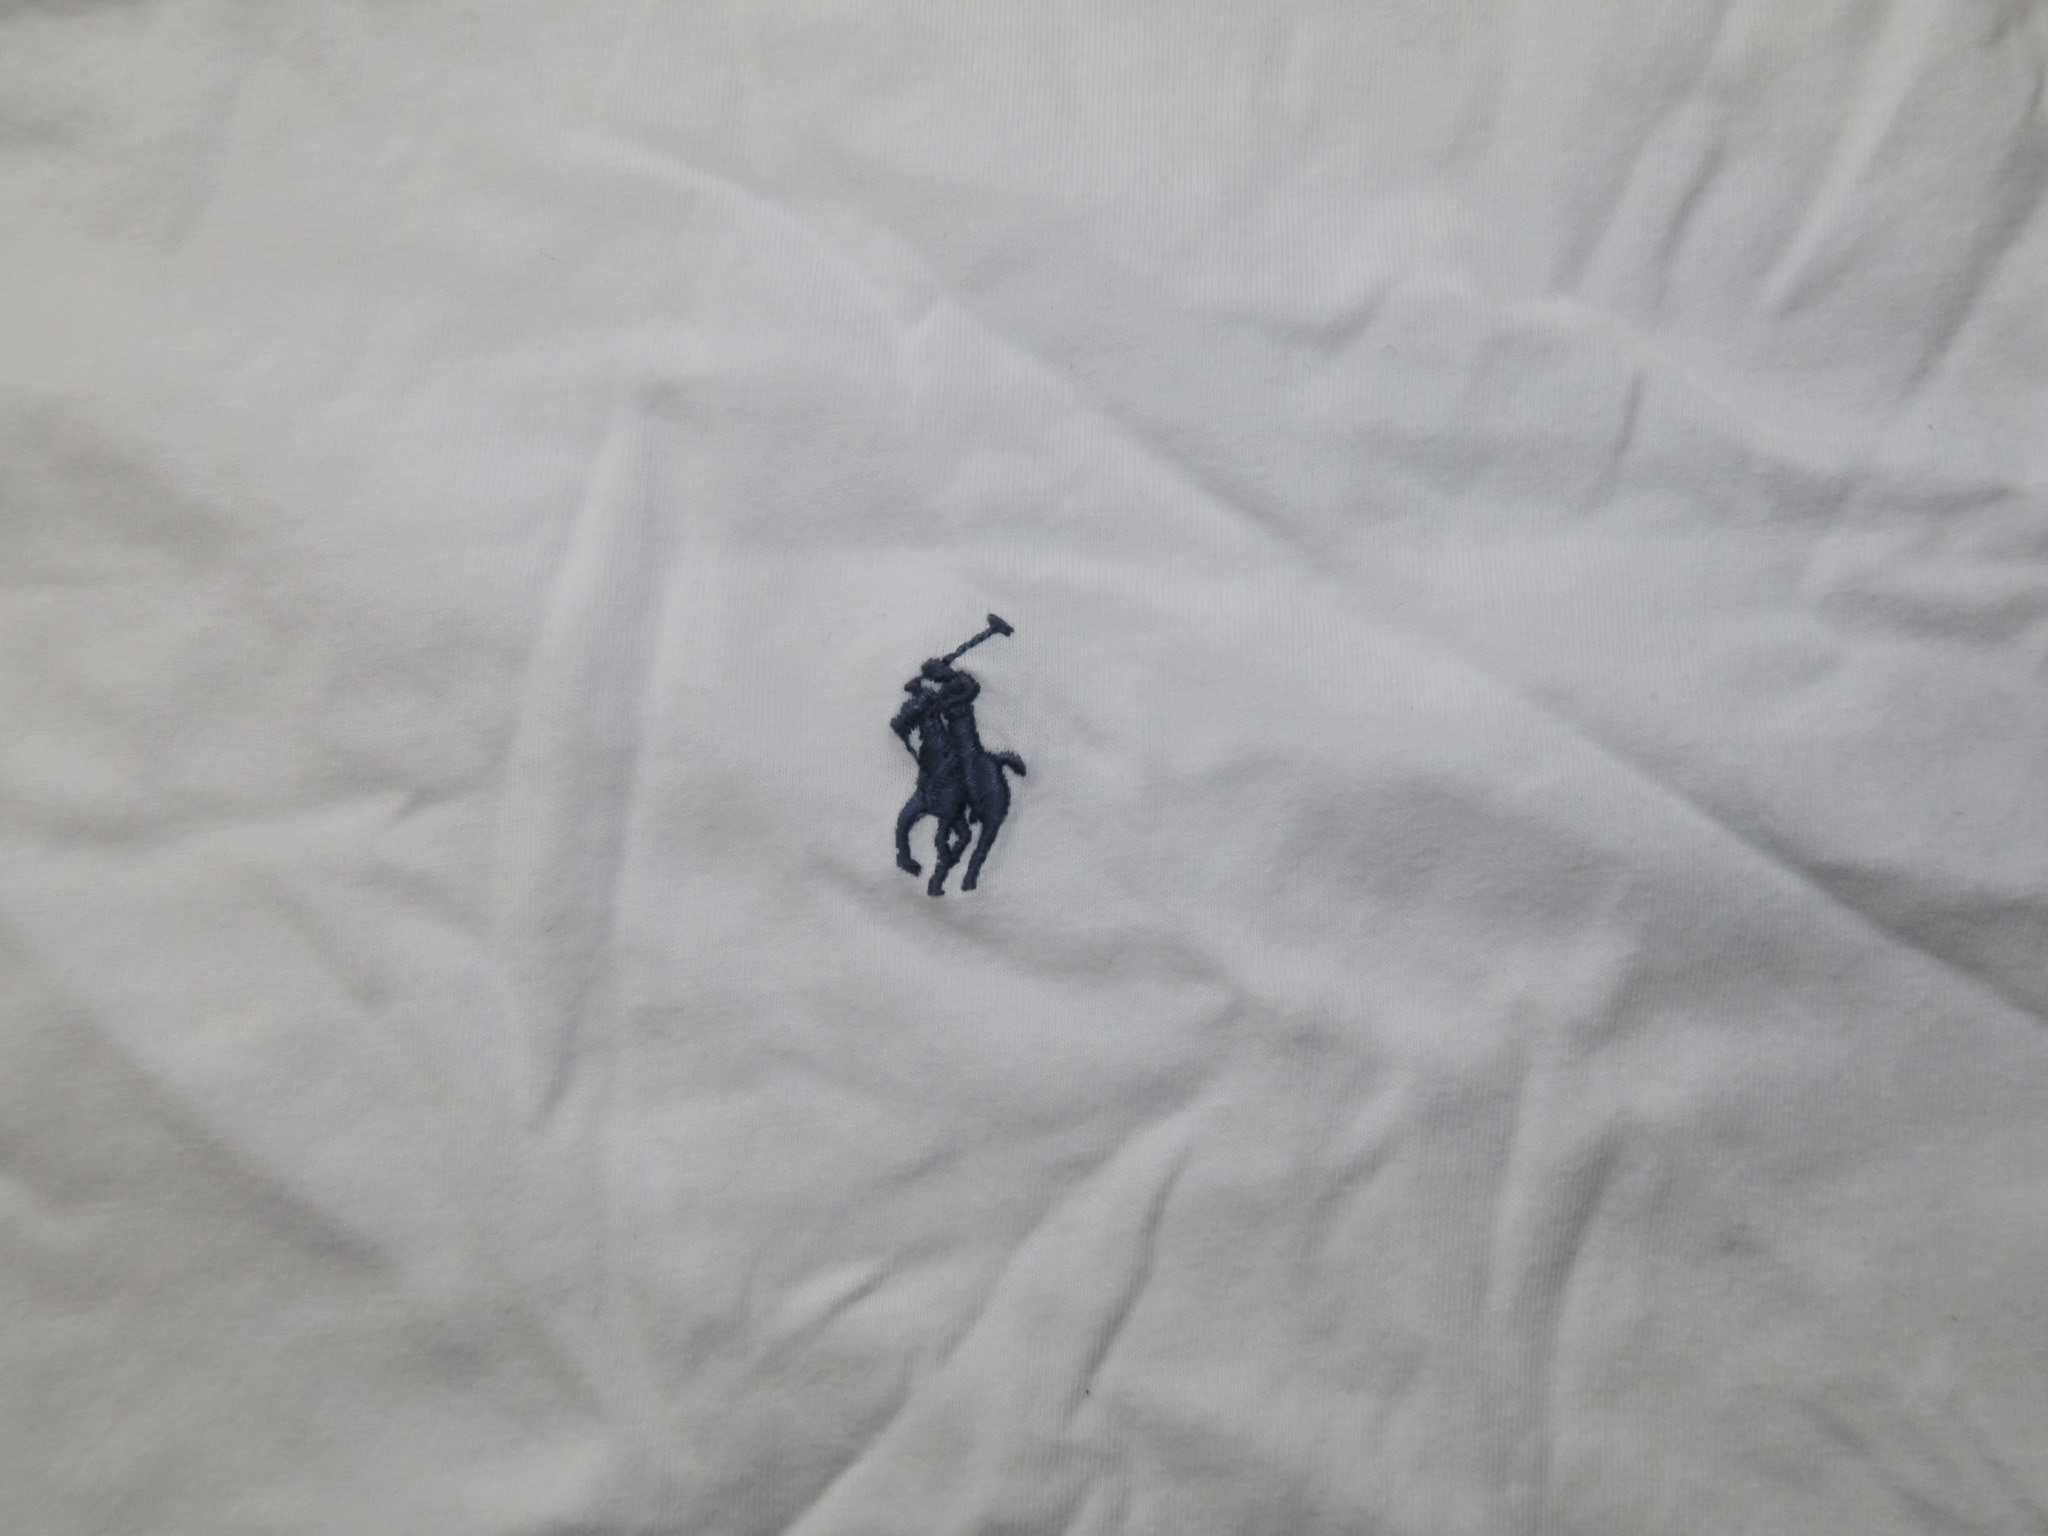 Polo Ralph Lauren koszulka sportowa XXL